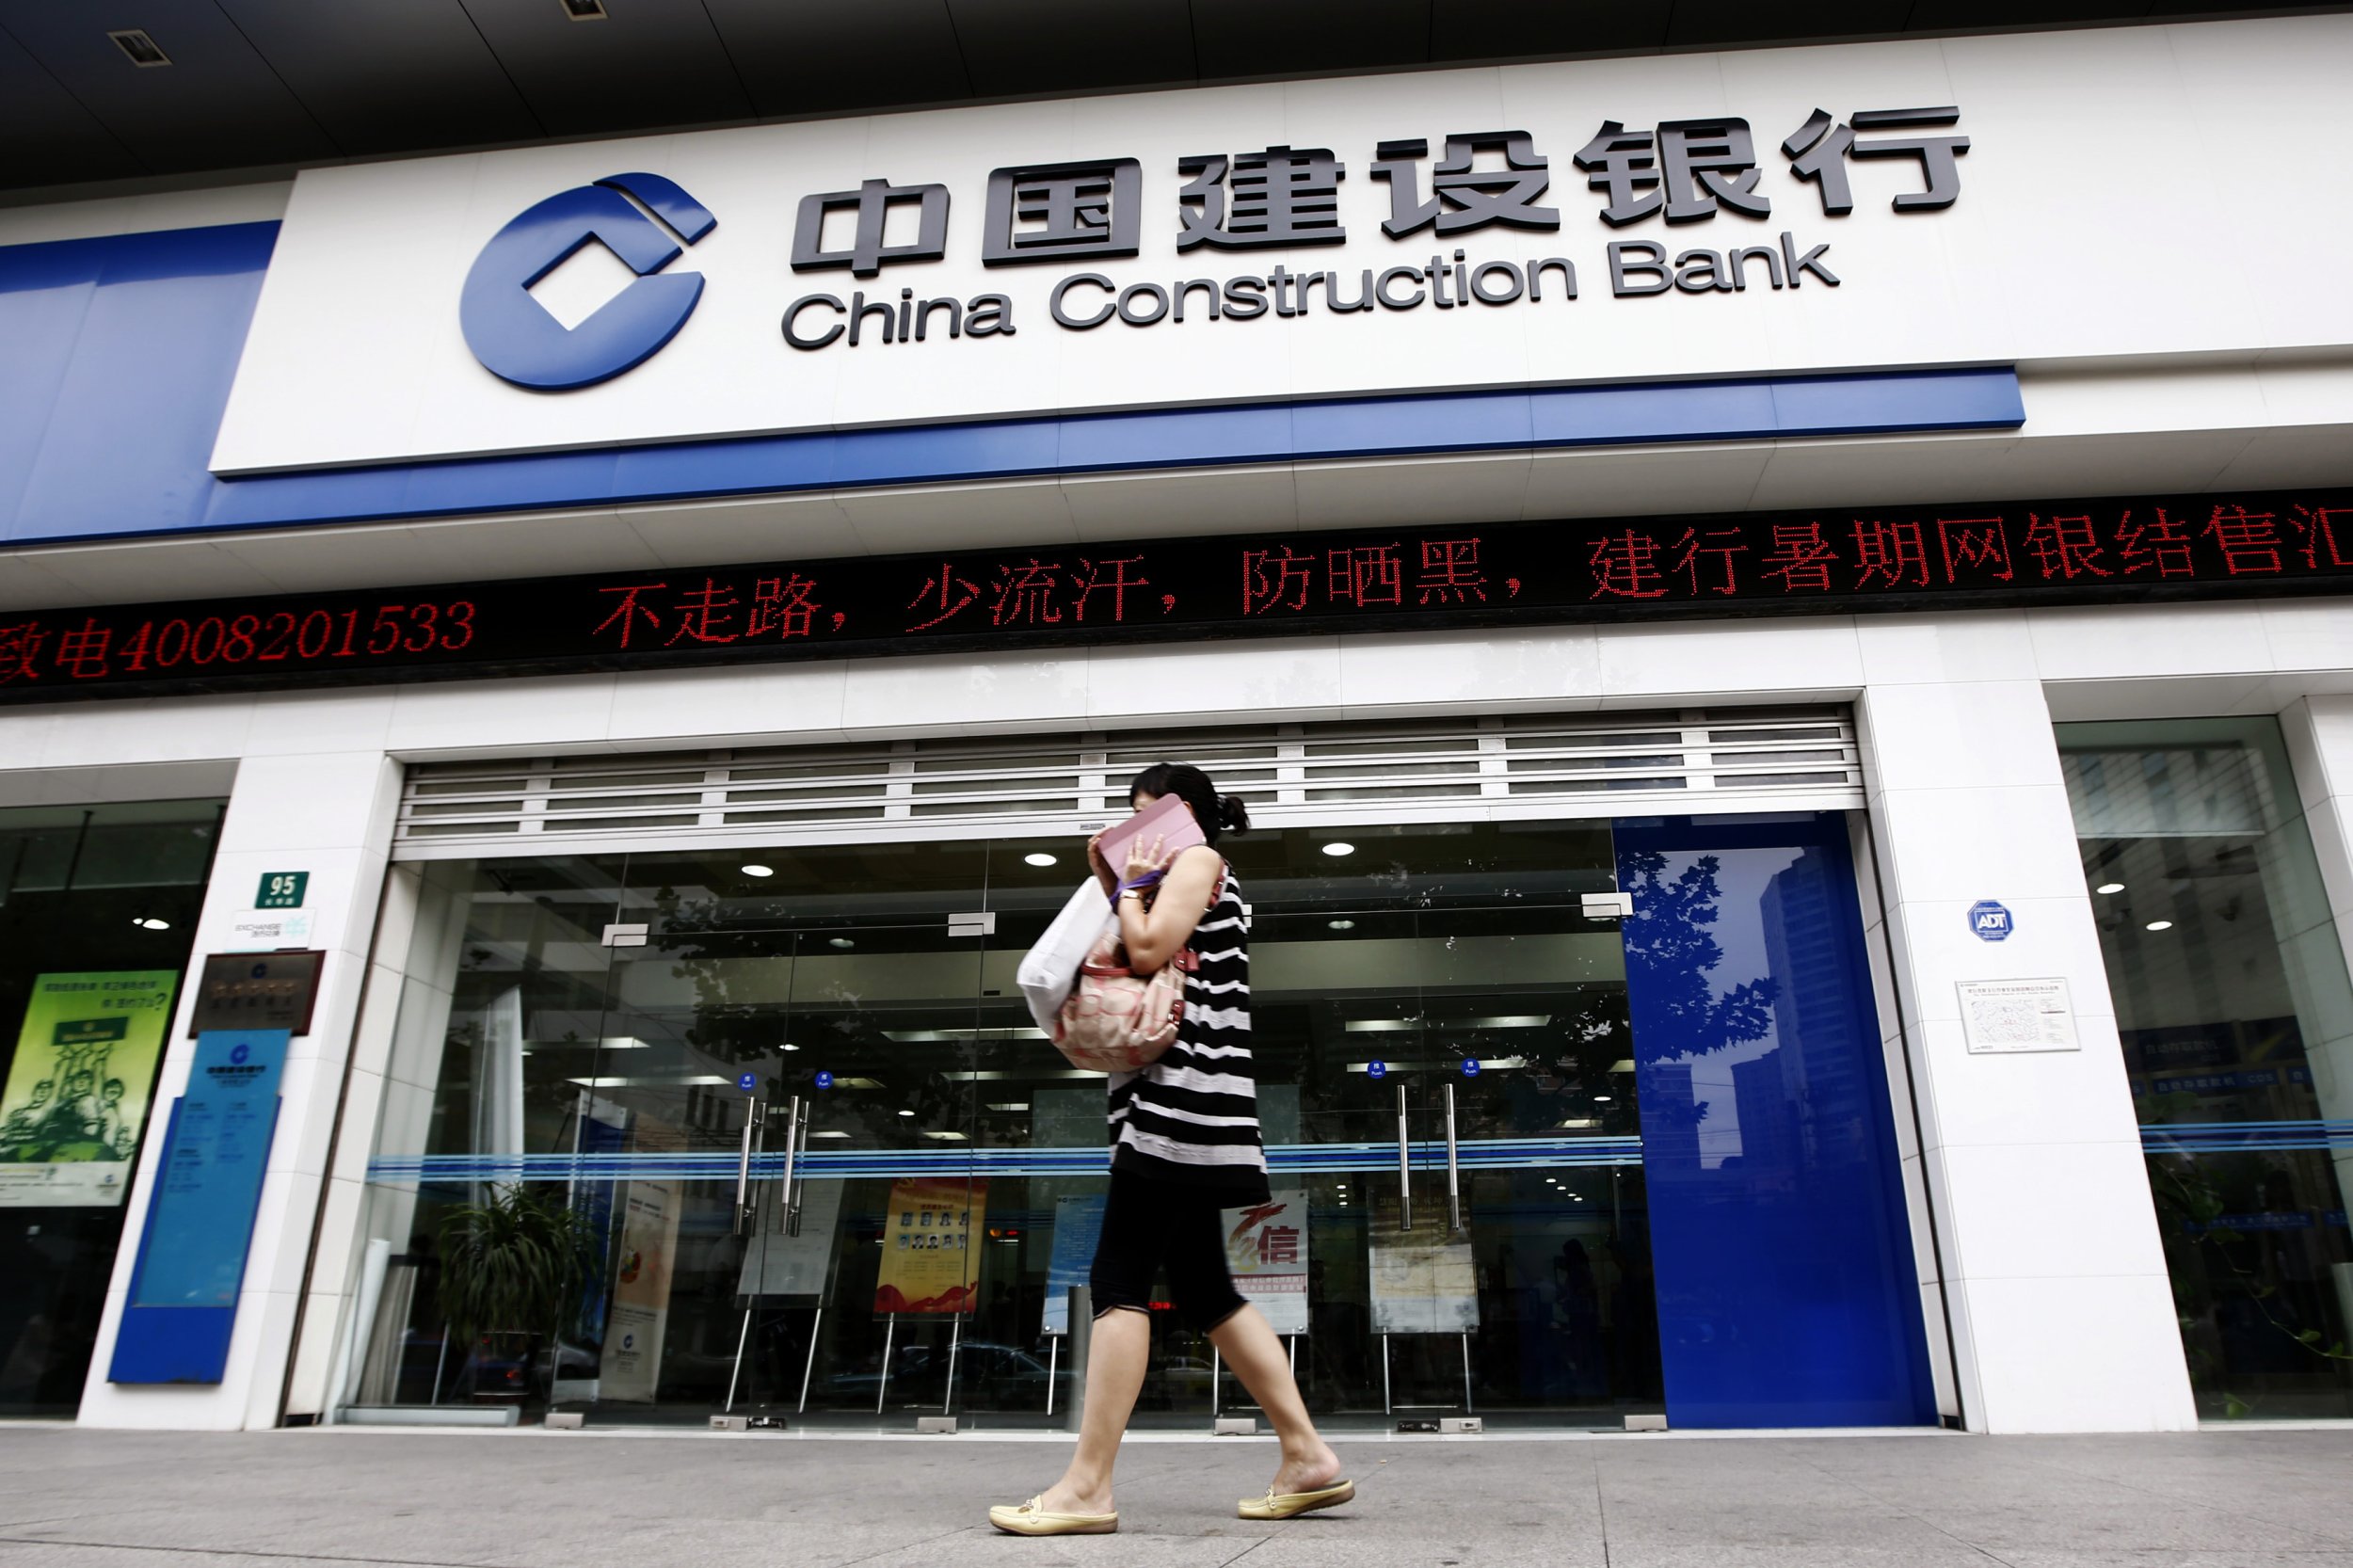 Bank of china китай. China Construction Bank (Китай). Строительный банк Китая China Construction Bank CCB. Китайские банки. Chinatown банк Китая.